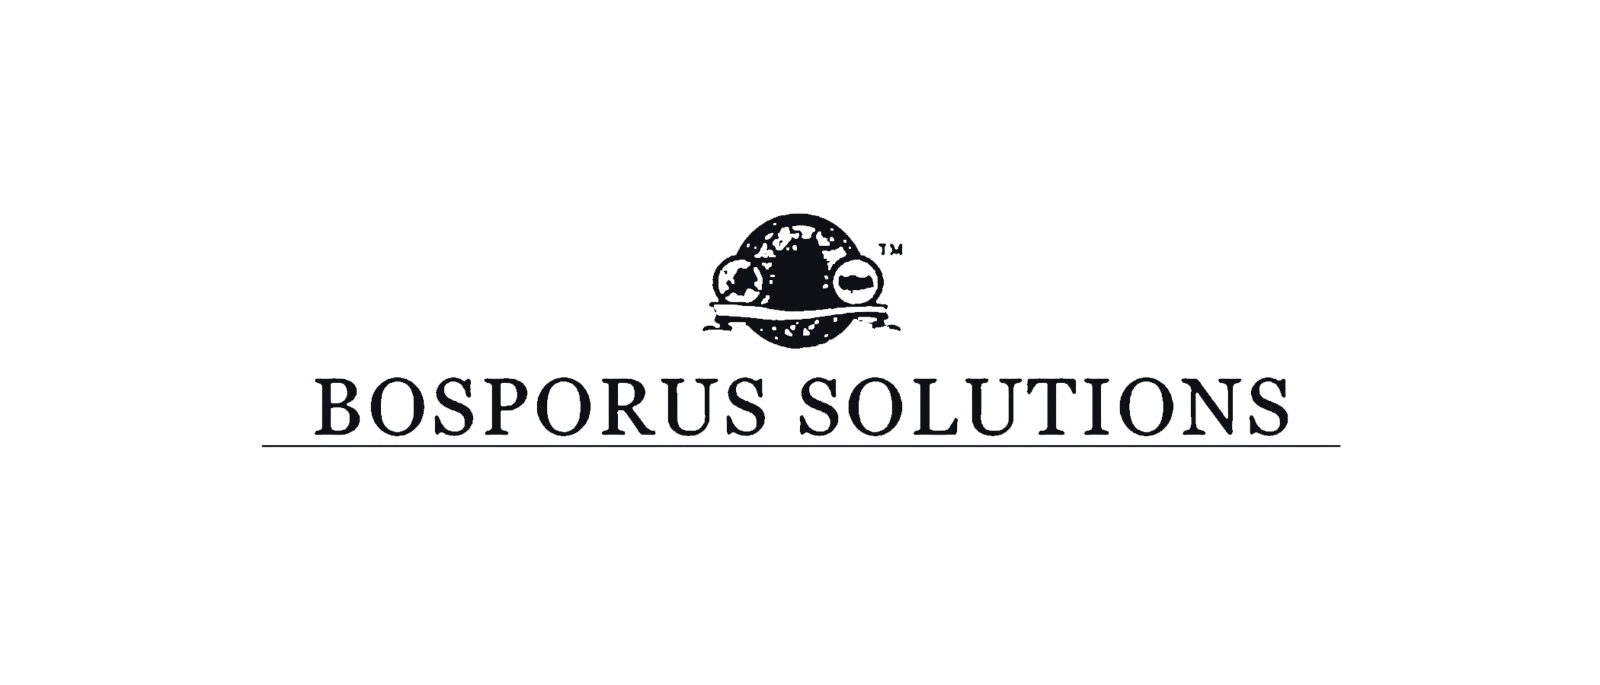 Bosporus Solutions